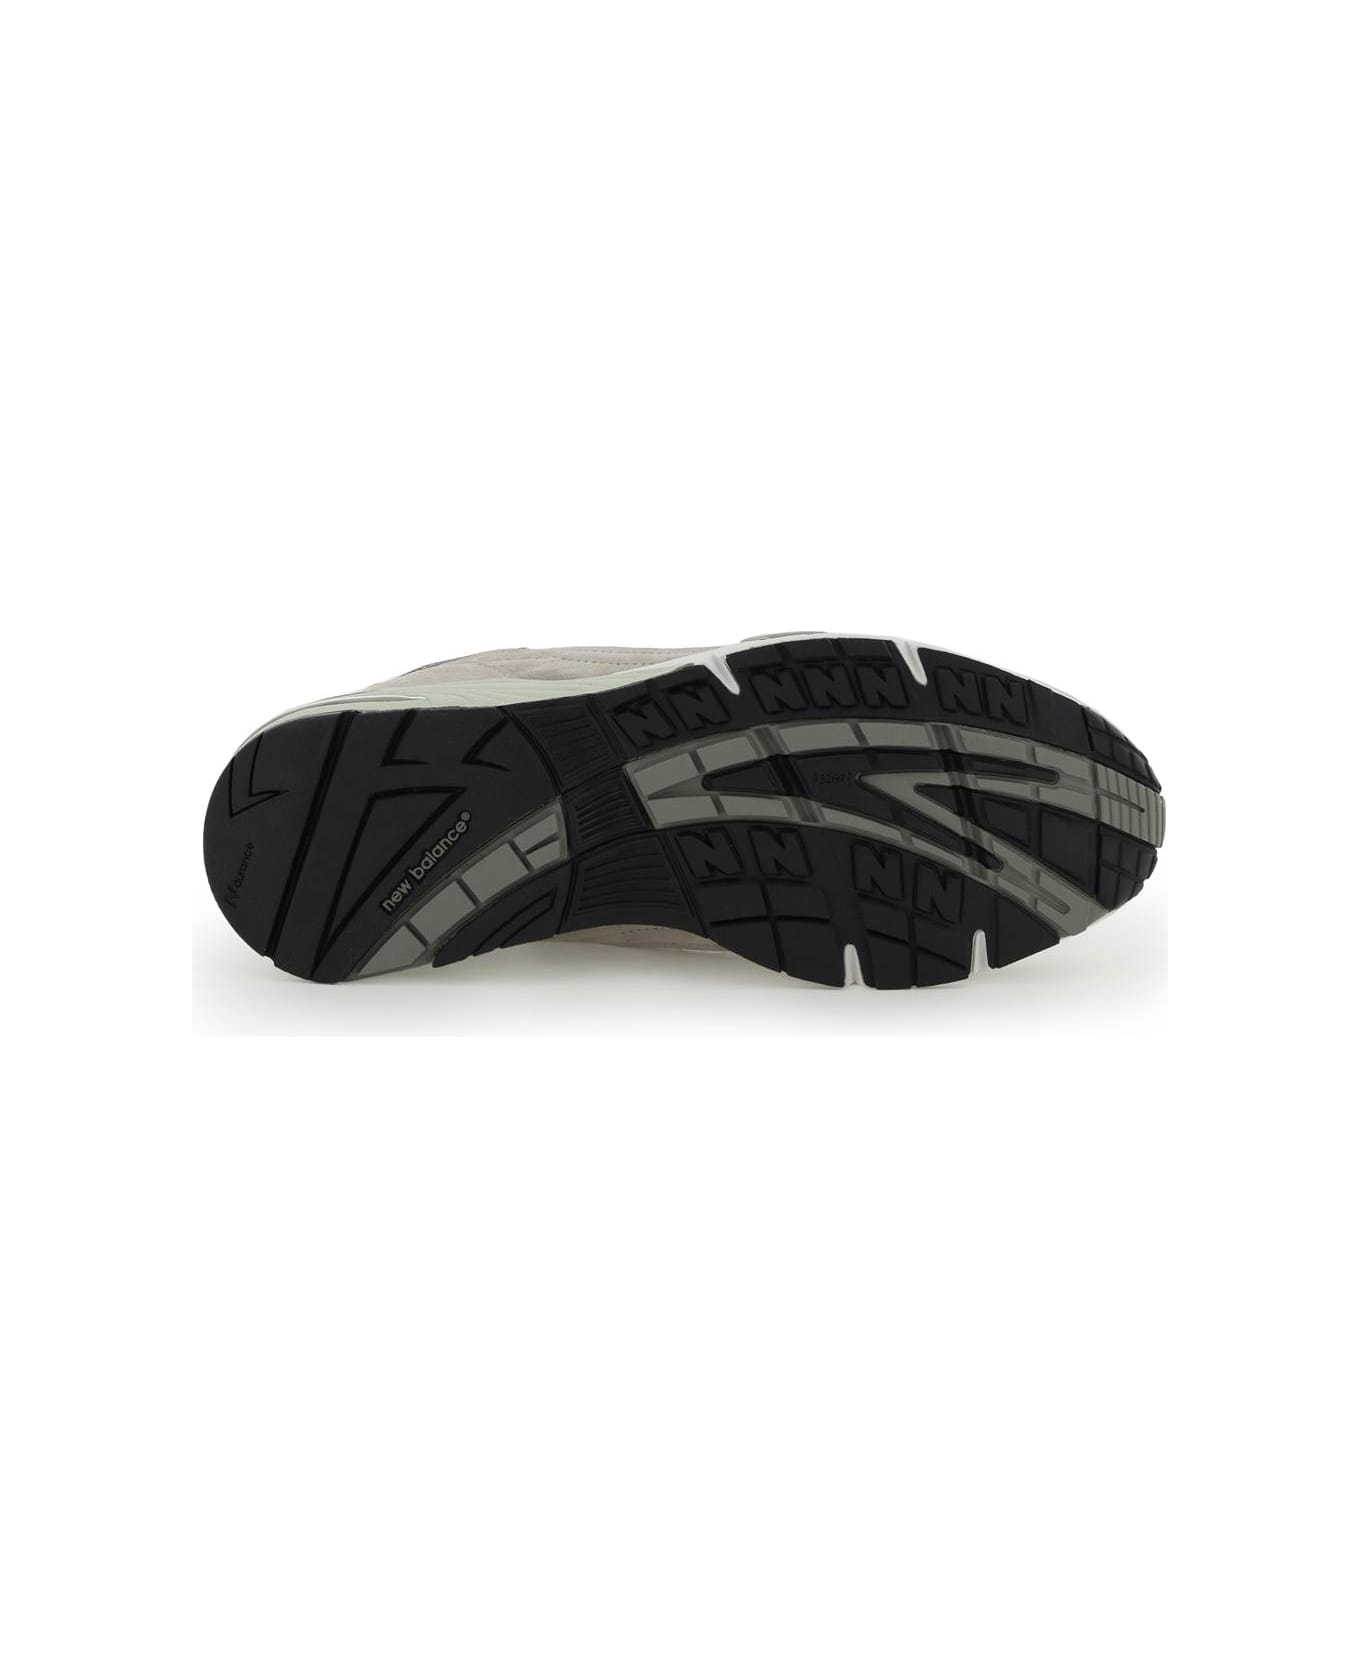 New Balance 991 Sneakers - Grey